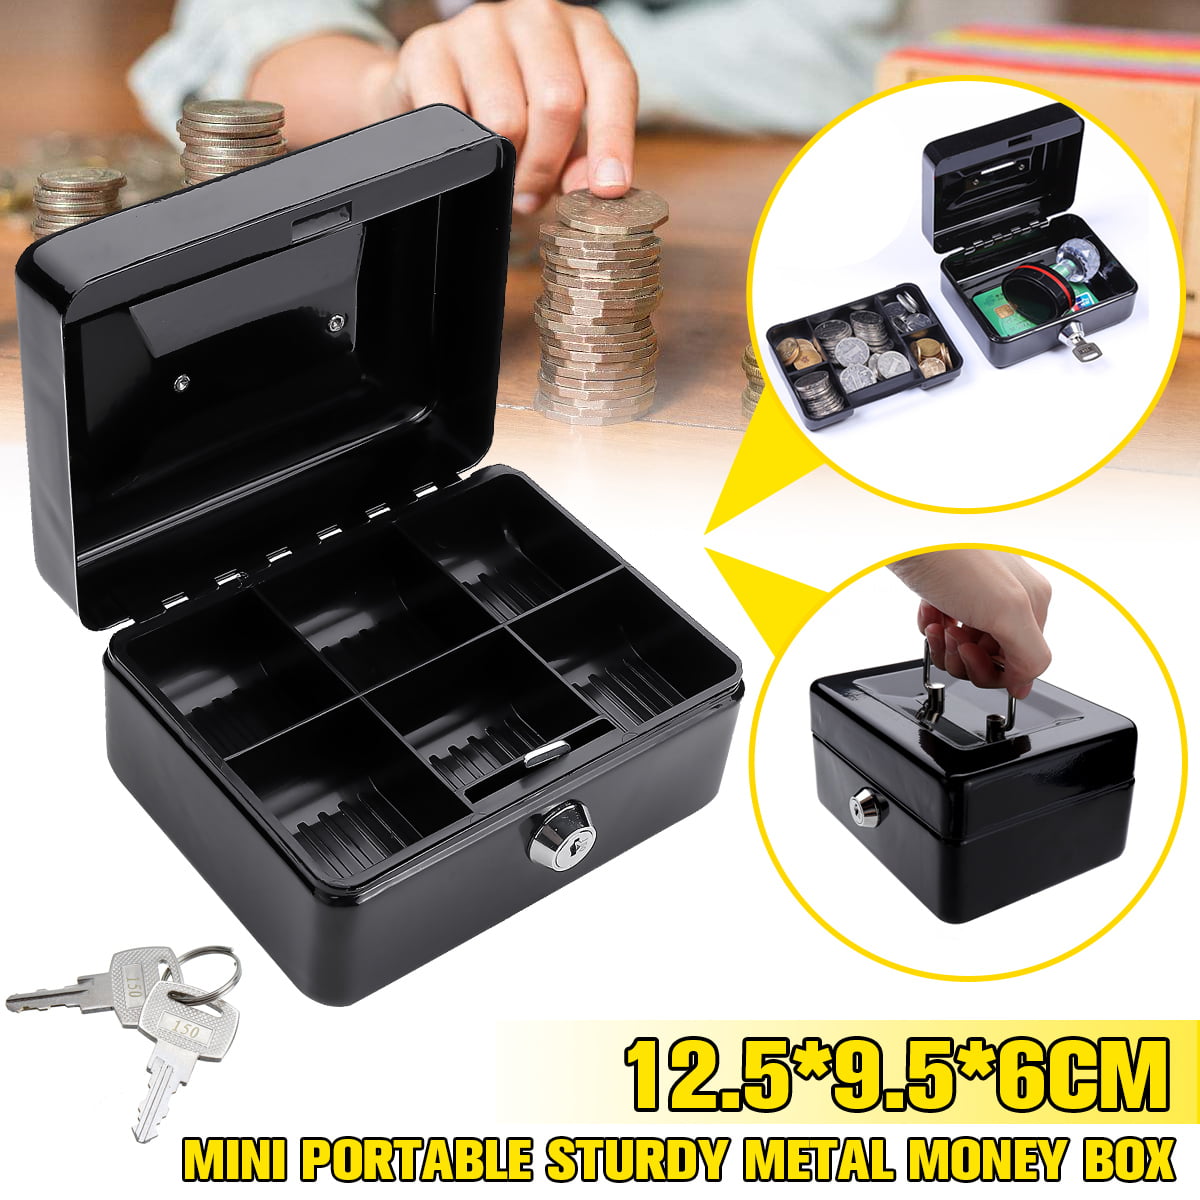 New Metal Cash Box Key Lockable Storage Security Petty 15 cm including 2 keys 